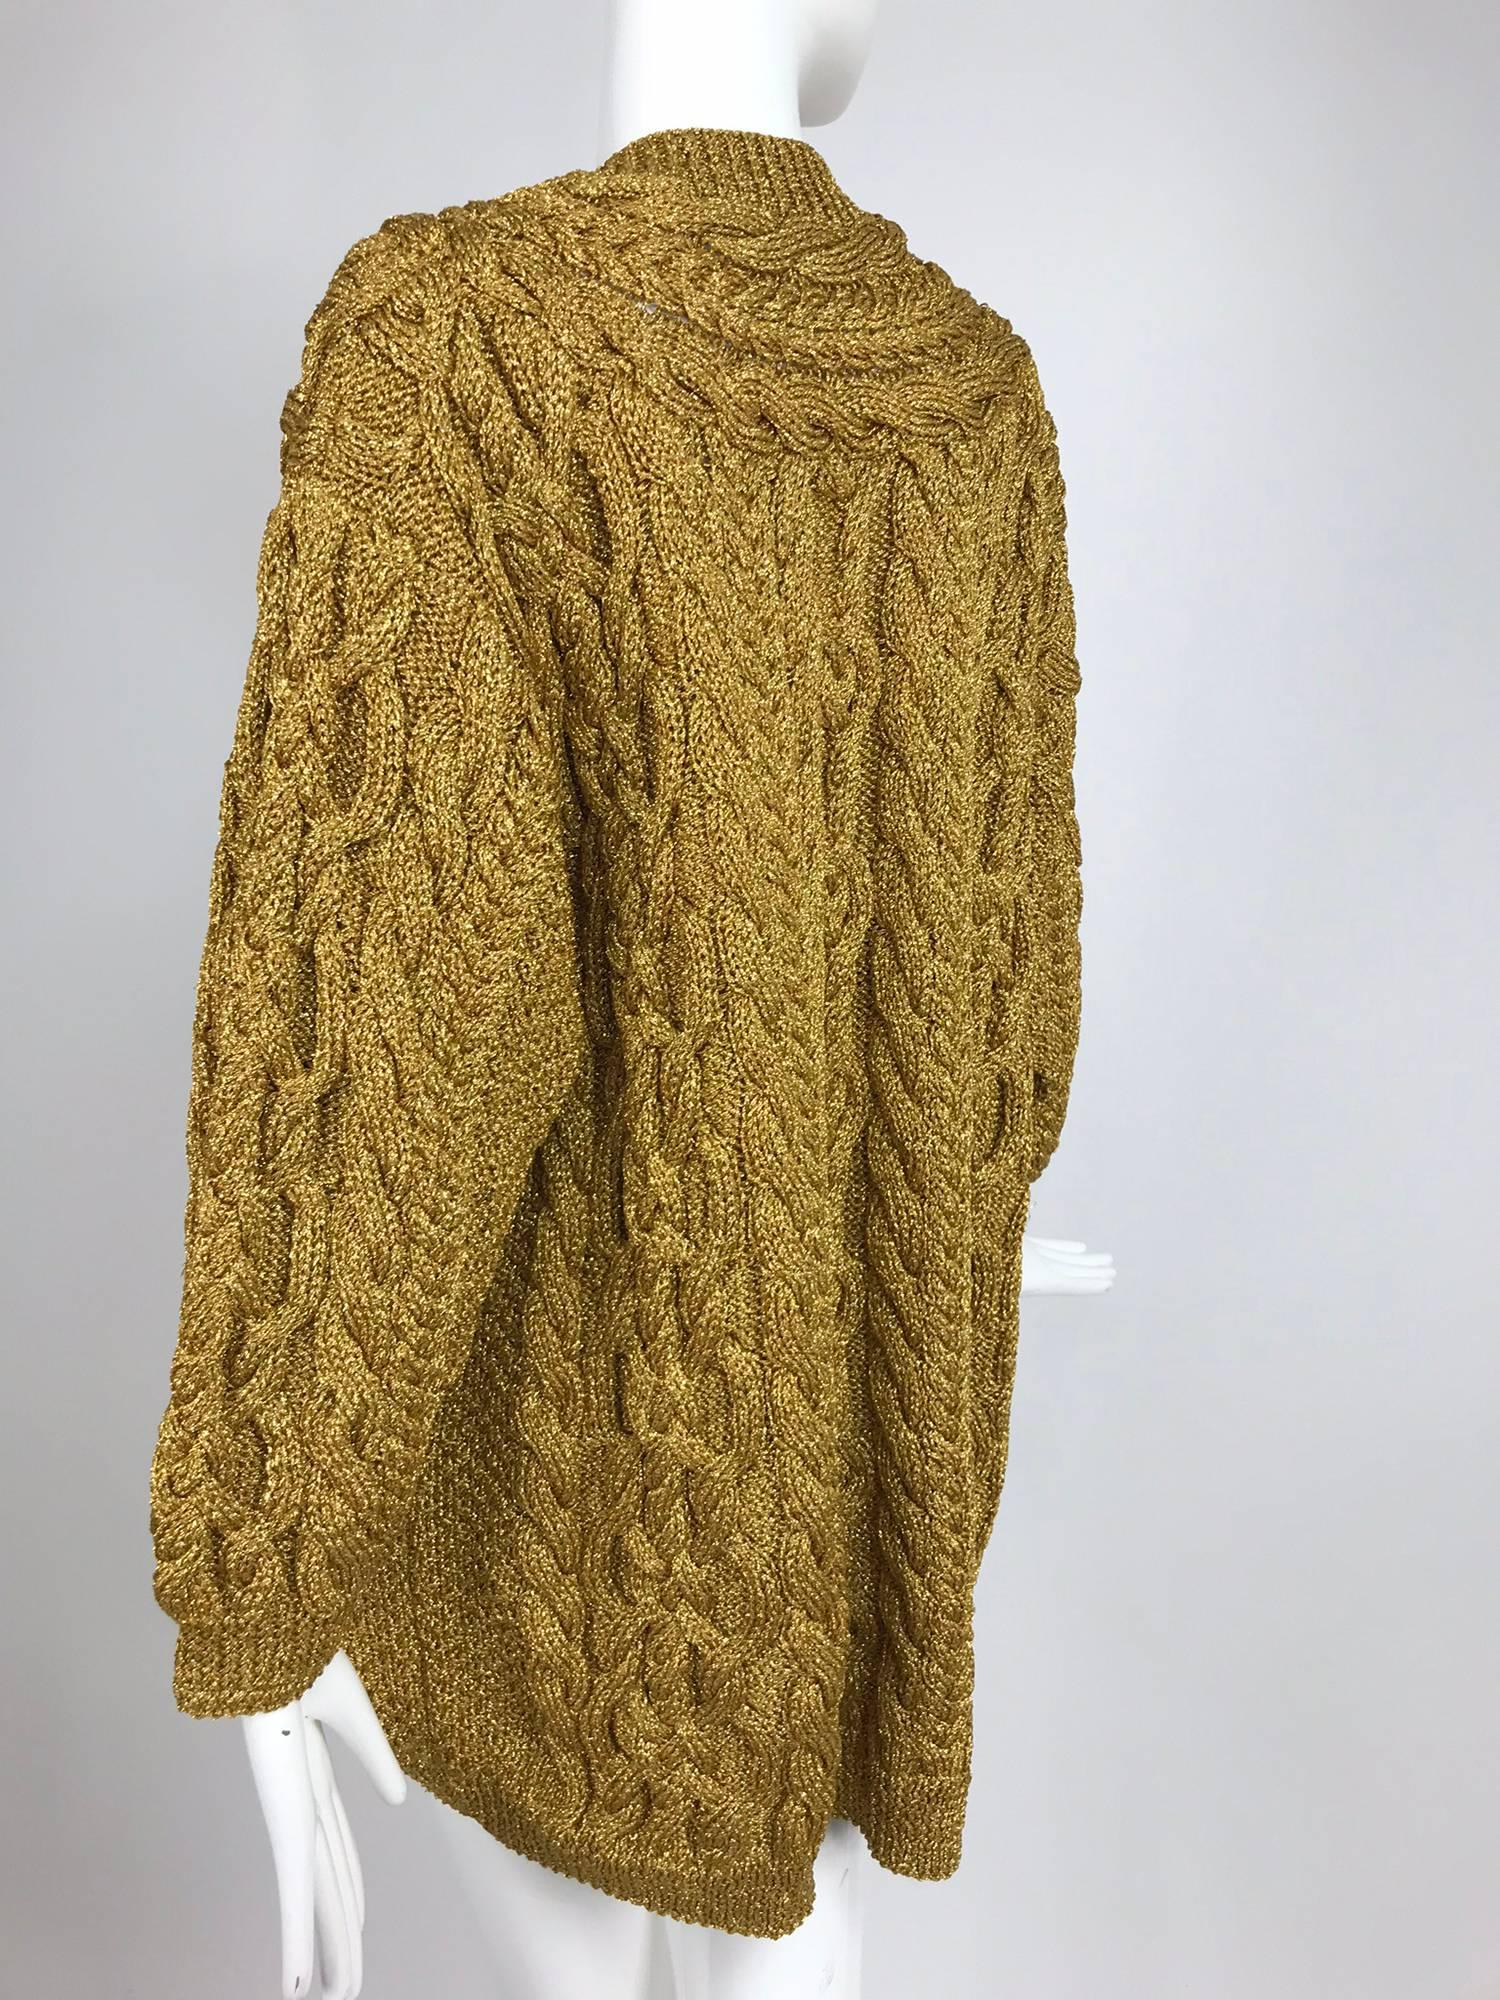 Anne Klein chunky gold metallic knit cardigan sweater 1990s 1